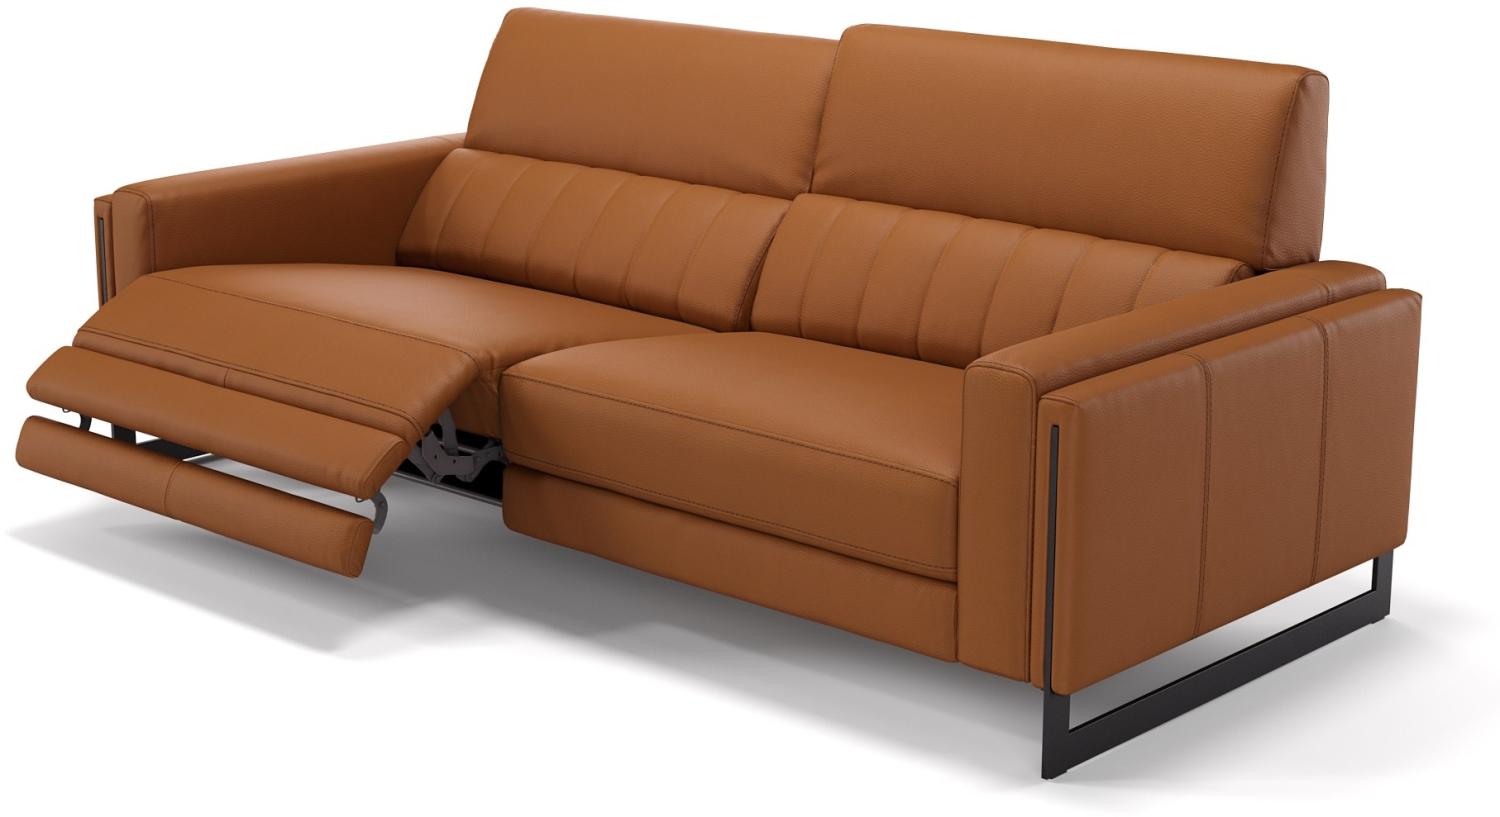 Sofanella 3-Sitzer MARA Leder Sofa Sofagarnitur in Cognac M: 232 Breite x 101 Tiefe Bild 1